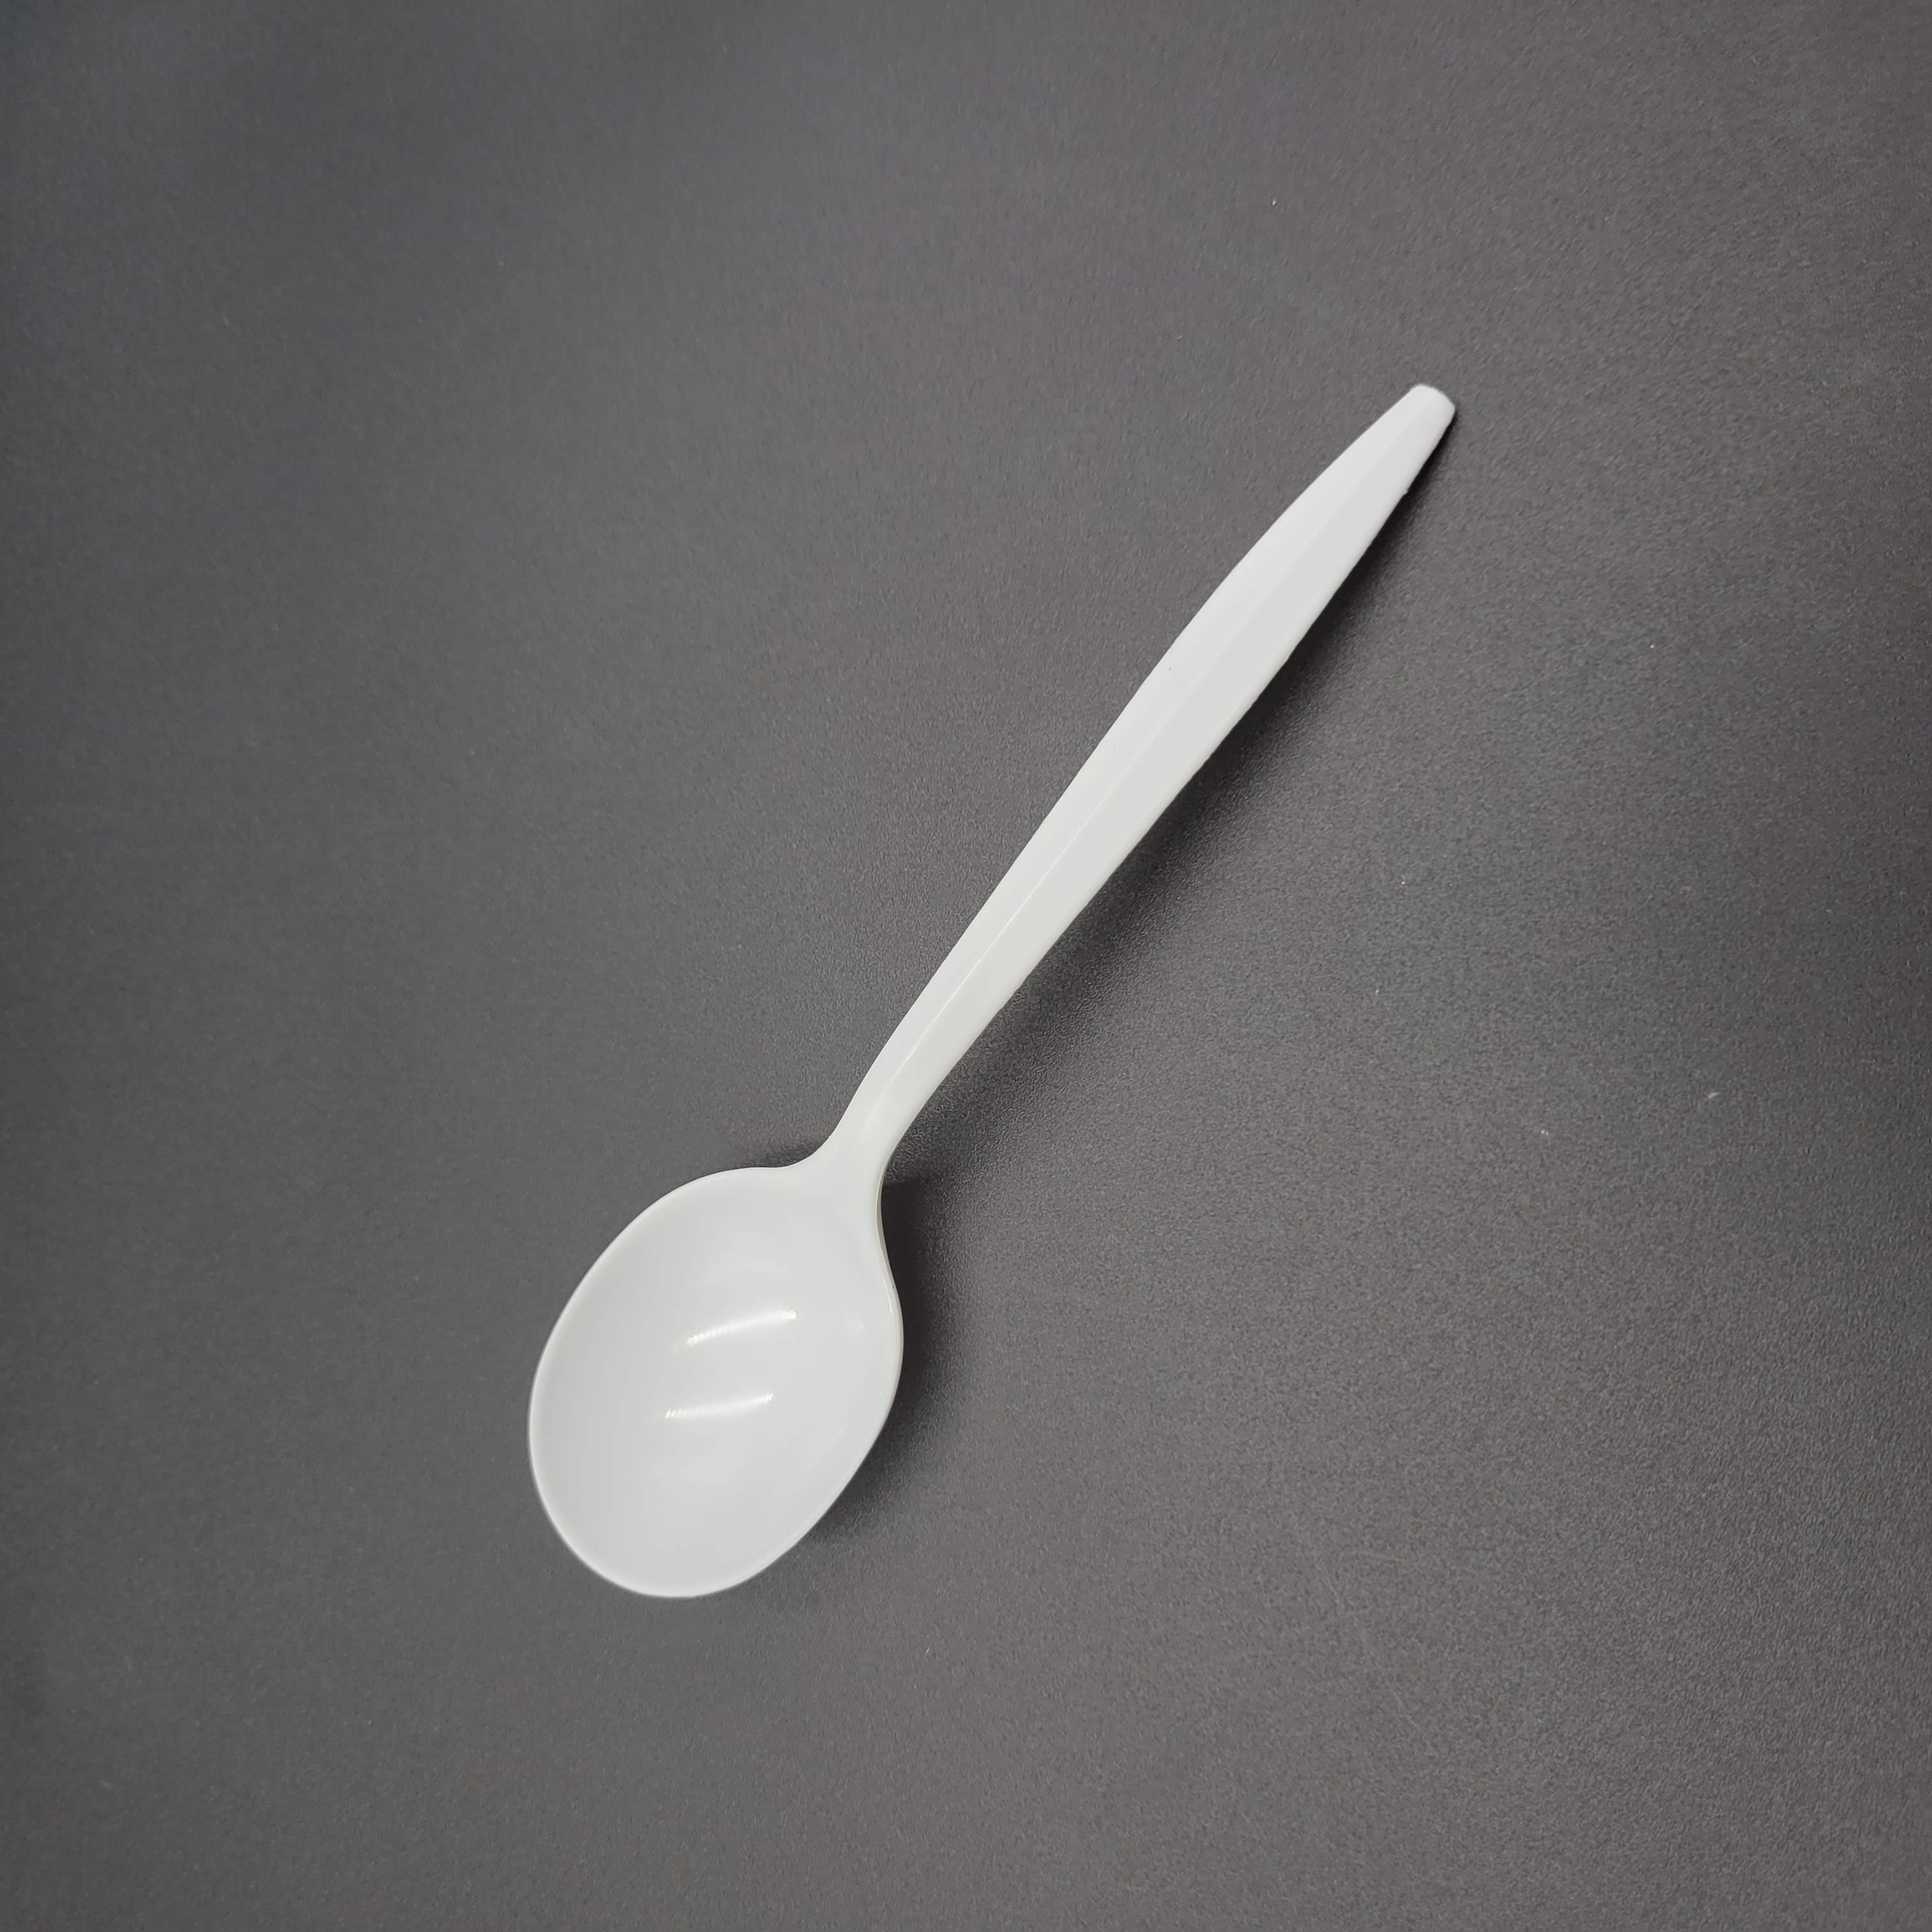 Bulk Medium Weight PP Soup Spoon White - 1000/Case